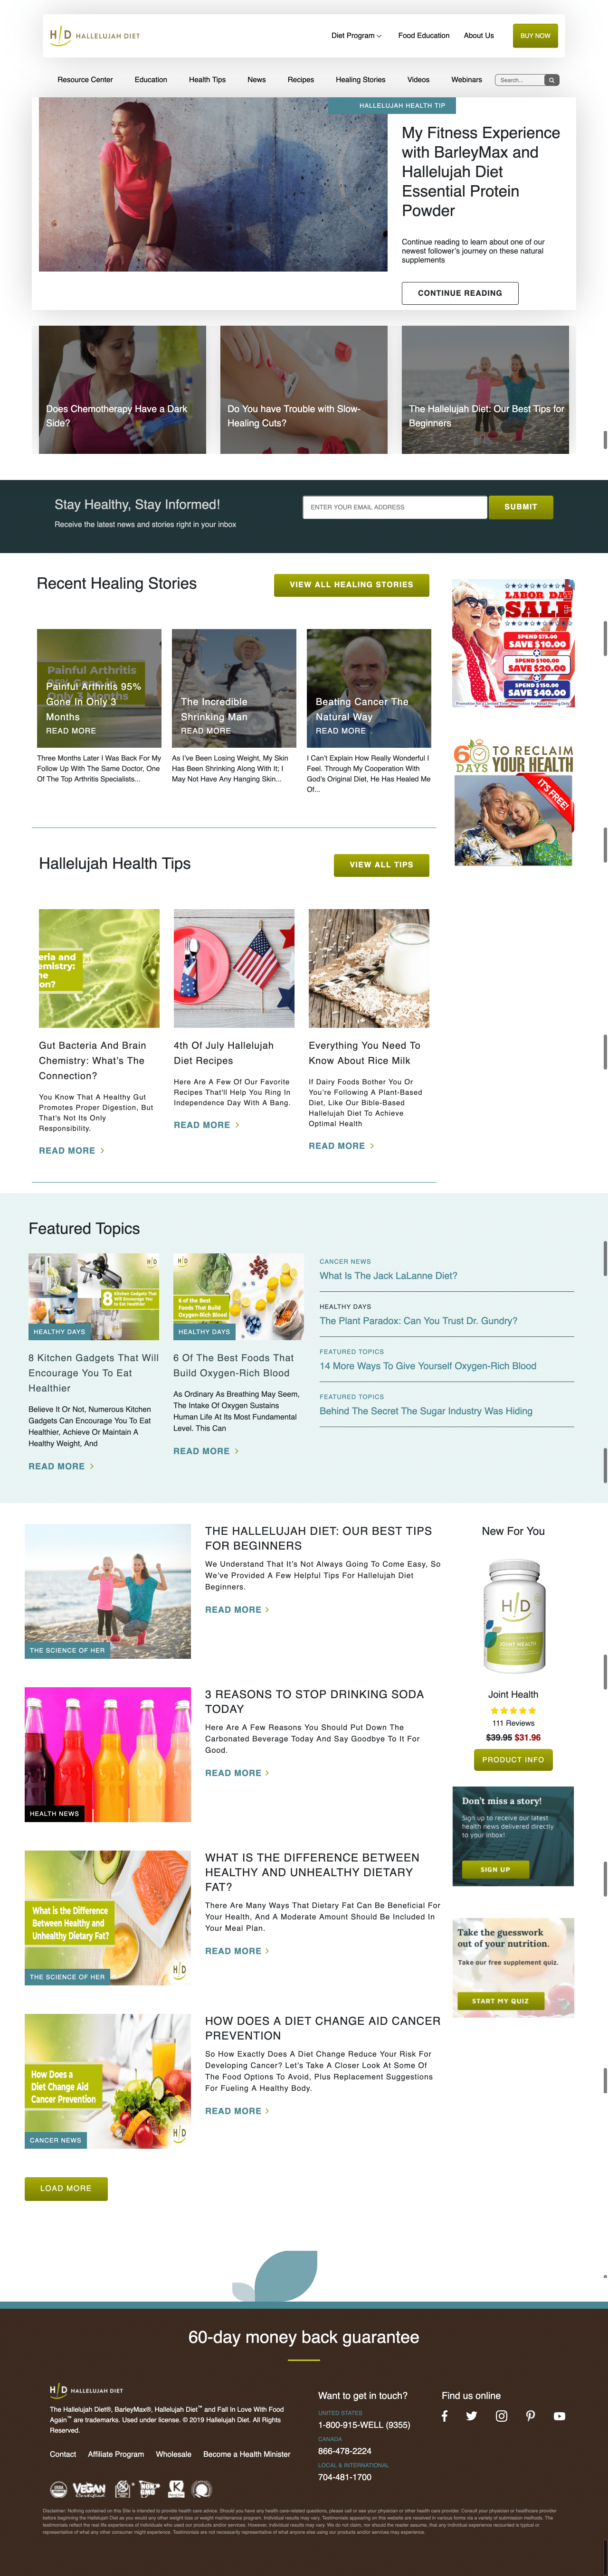 Hallelujah Diet resources webpage